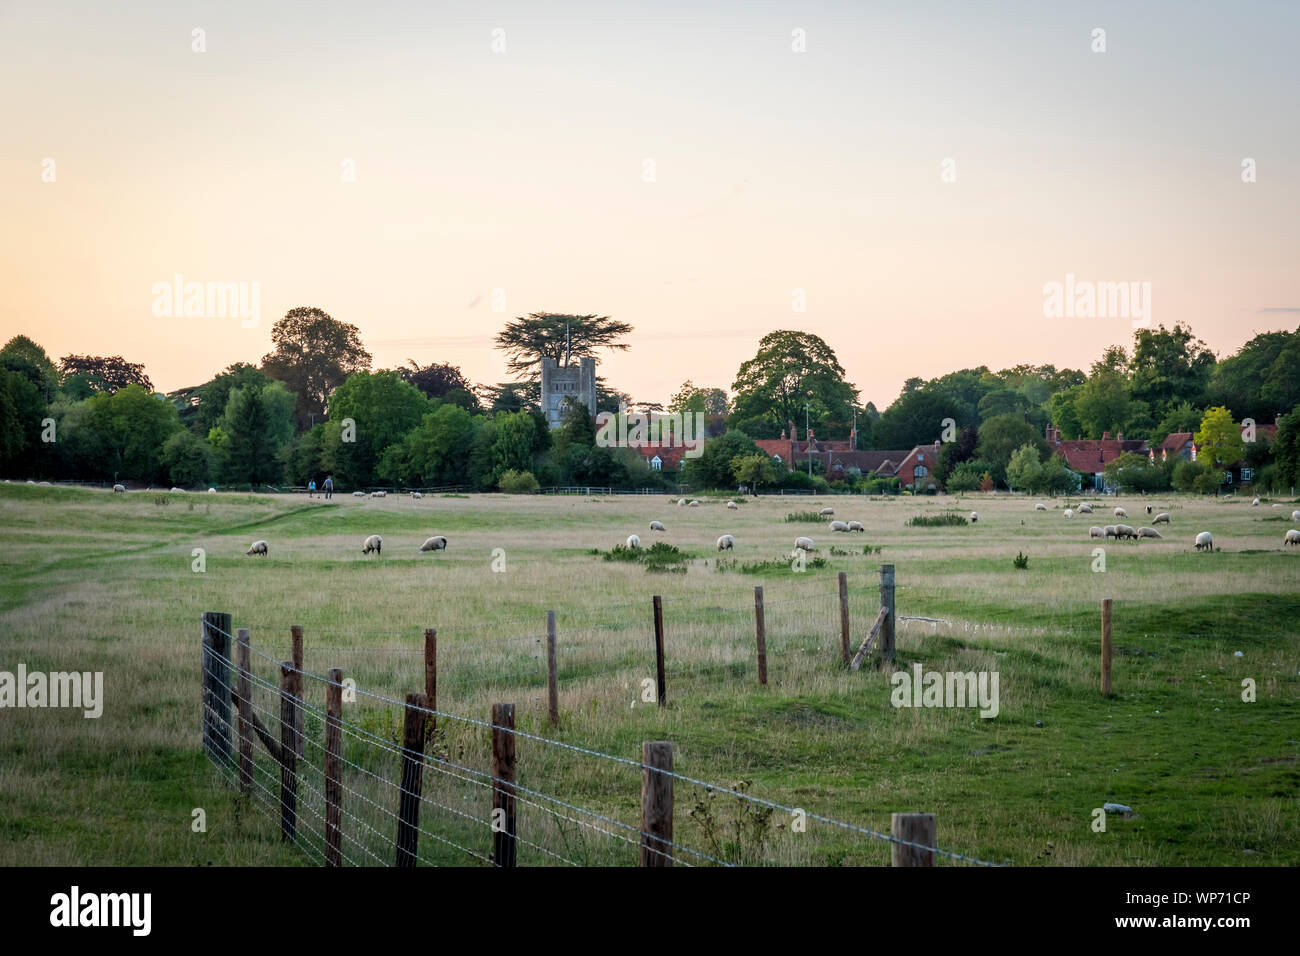 Sheep graze in a field by the village of Hambleden Stock Photo